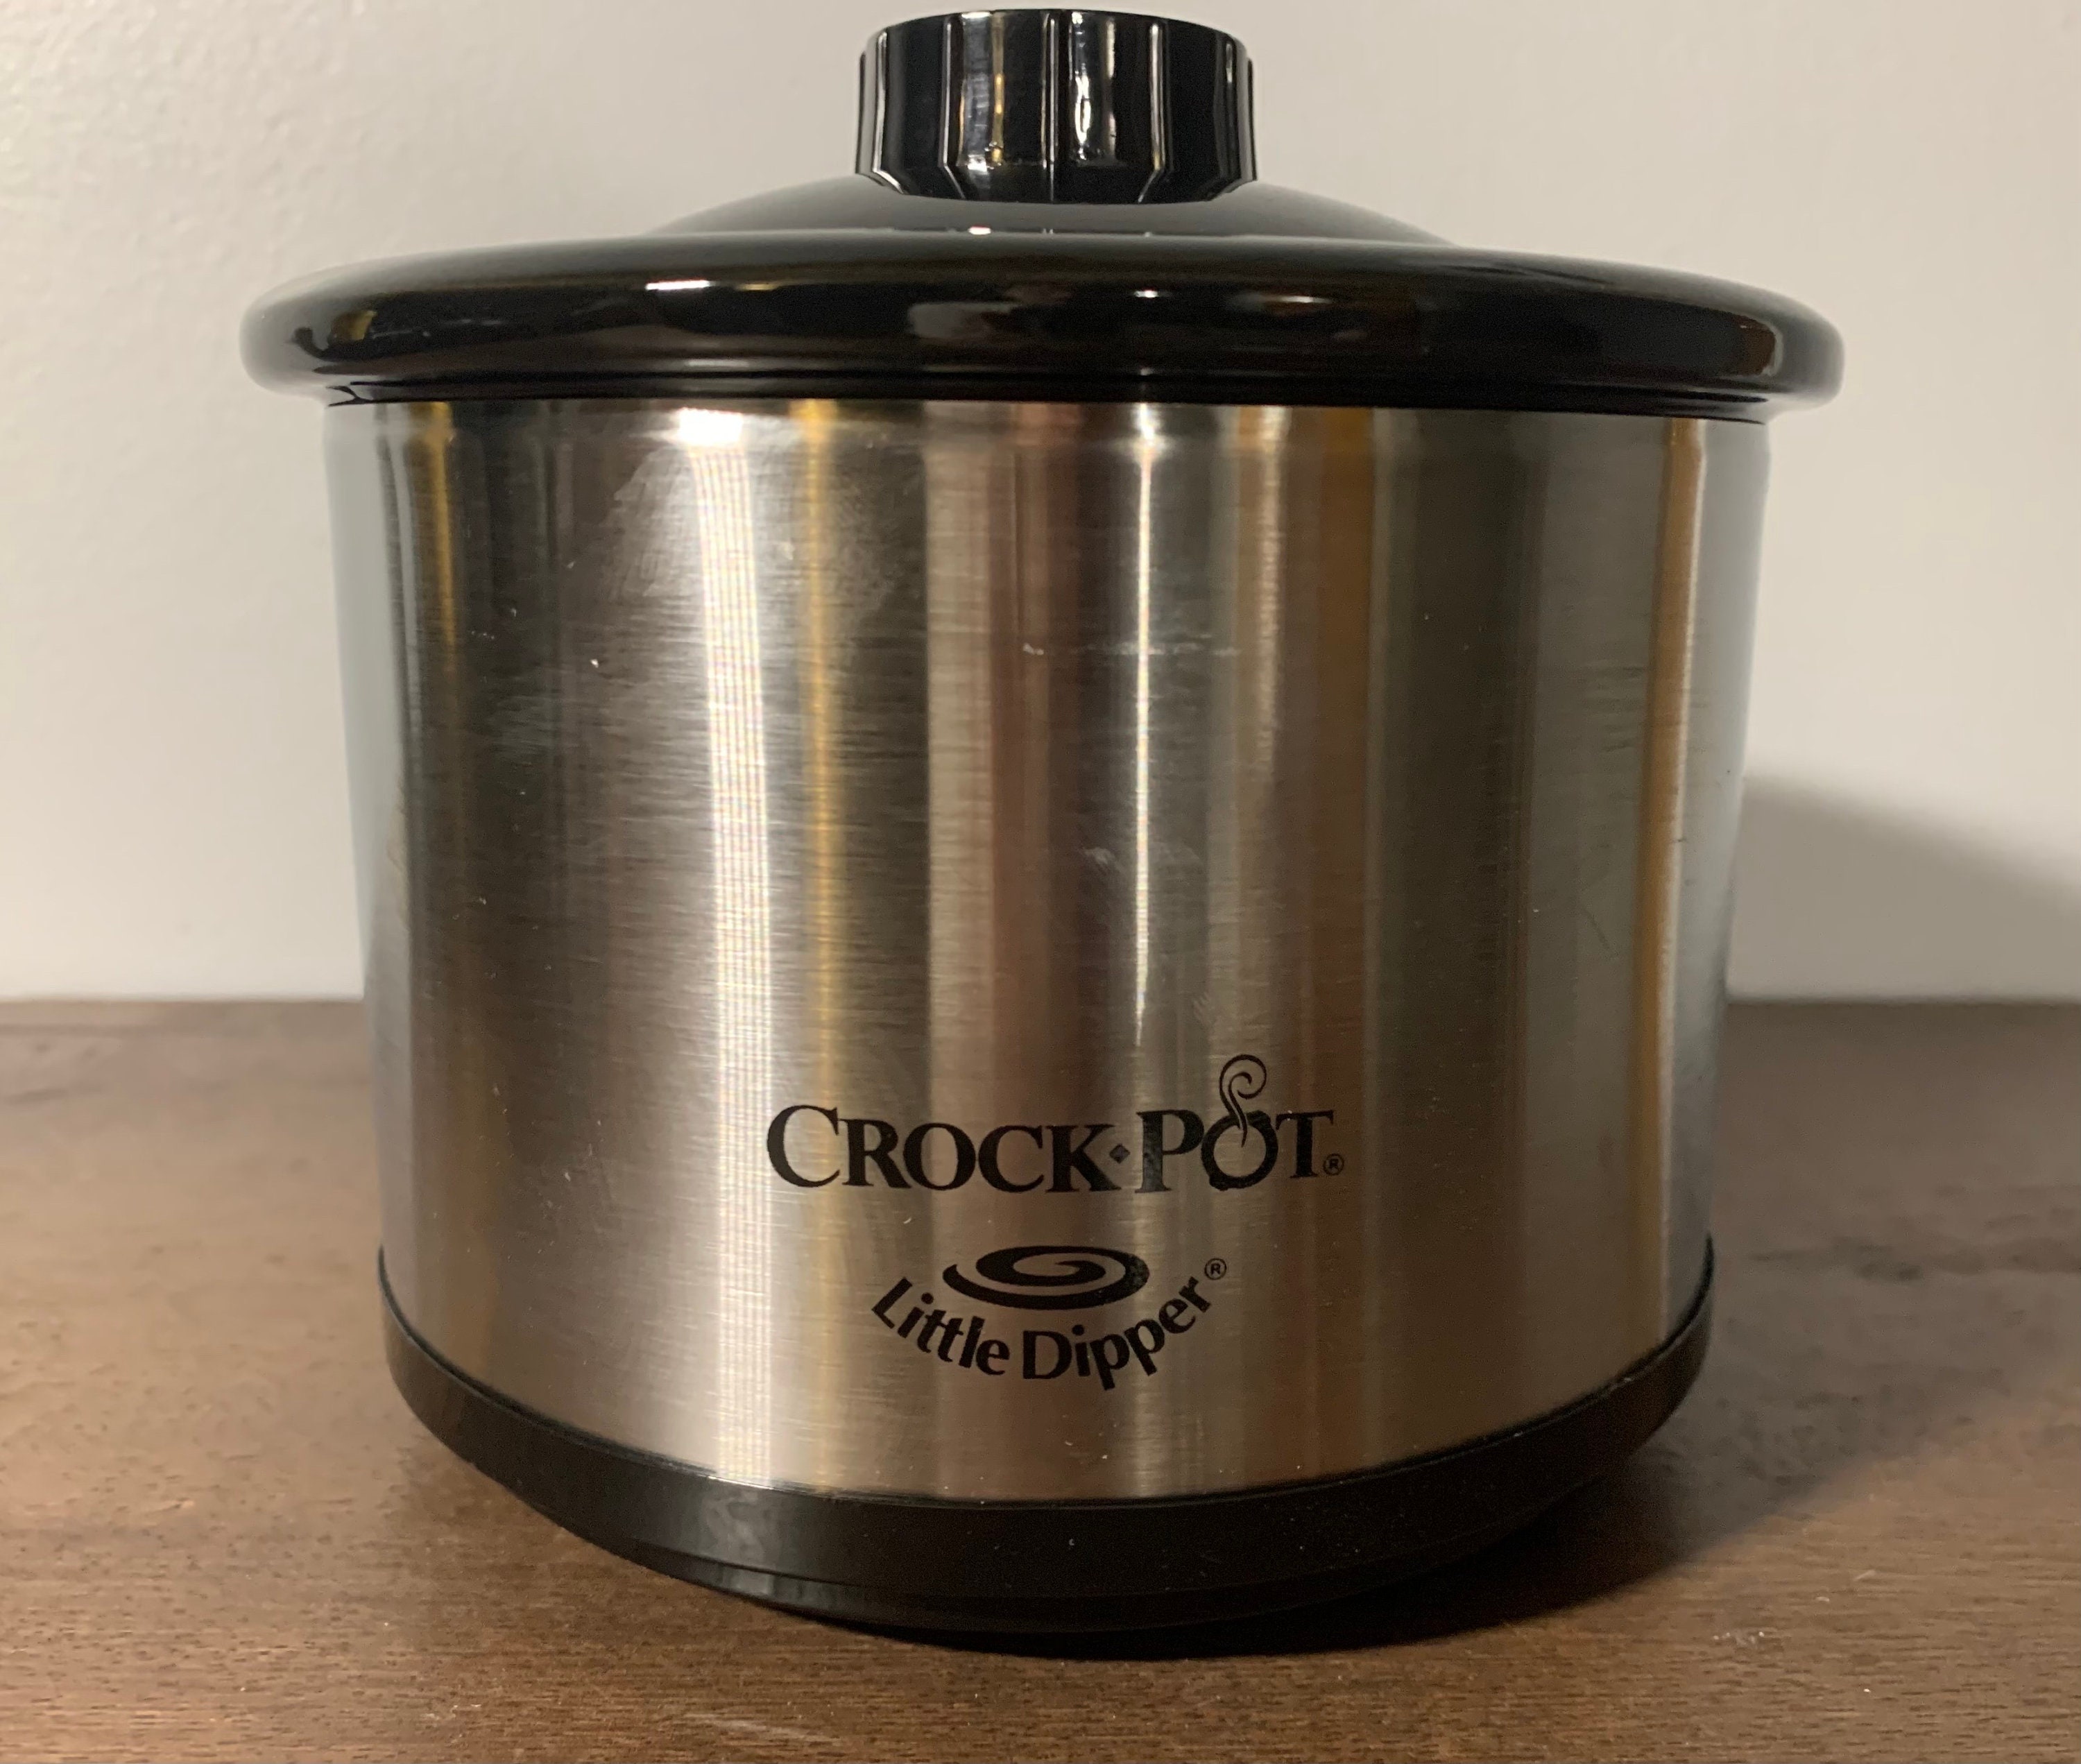 Crock-Pot Little Dipper With Lid